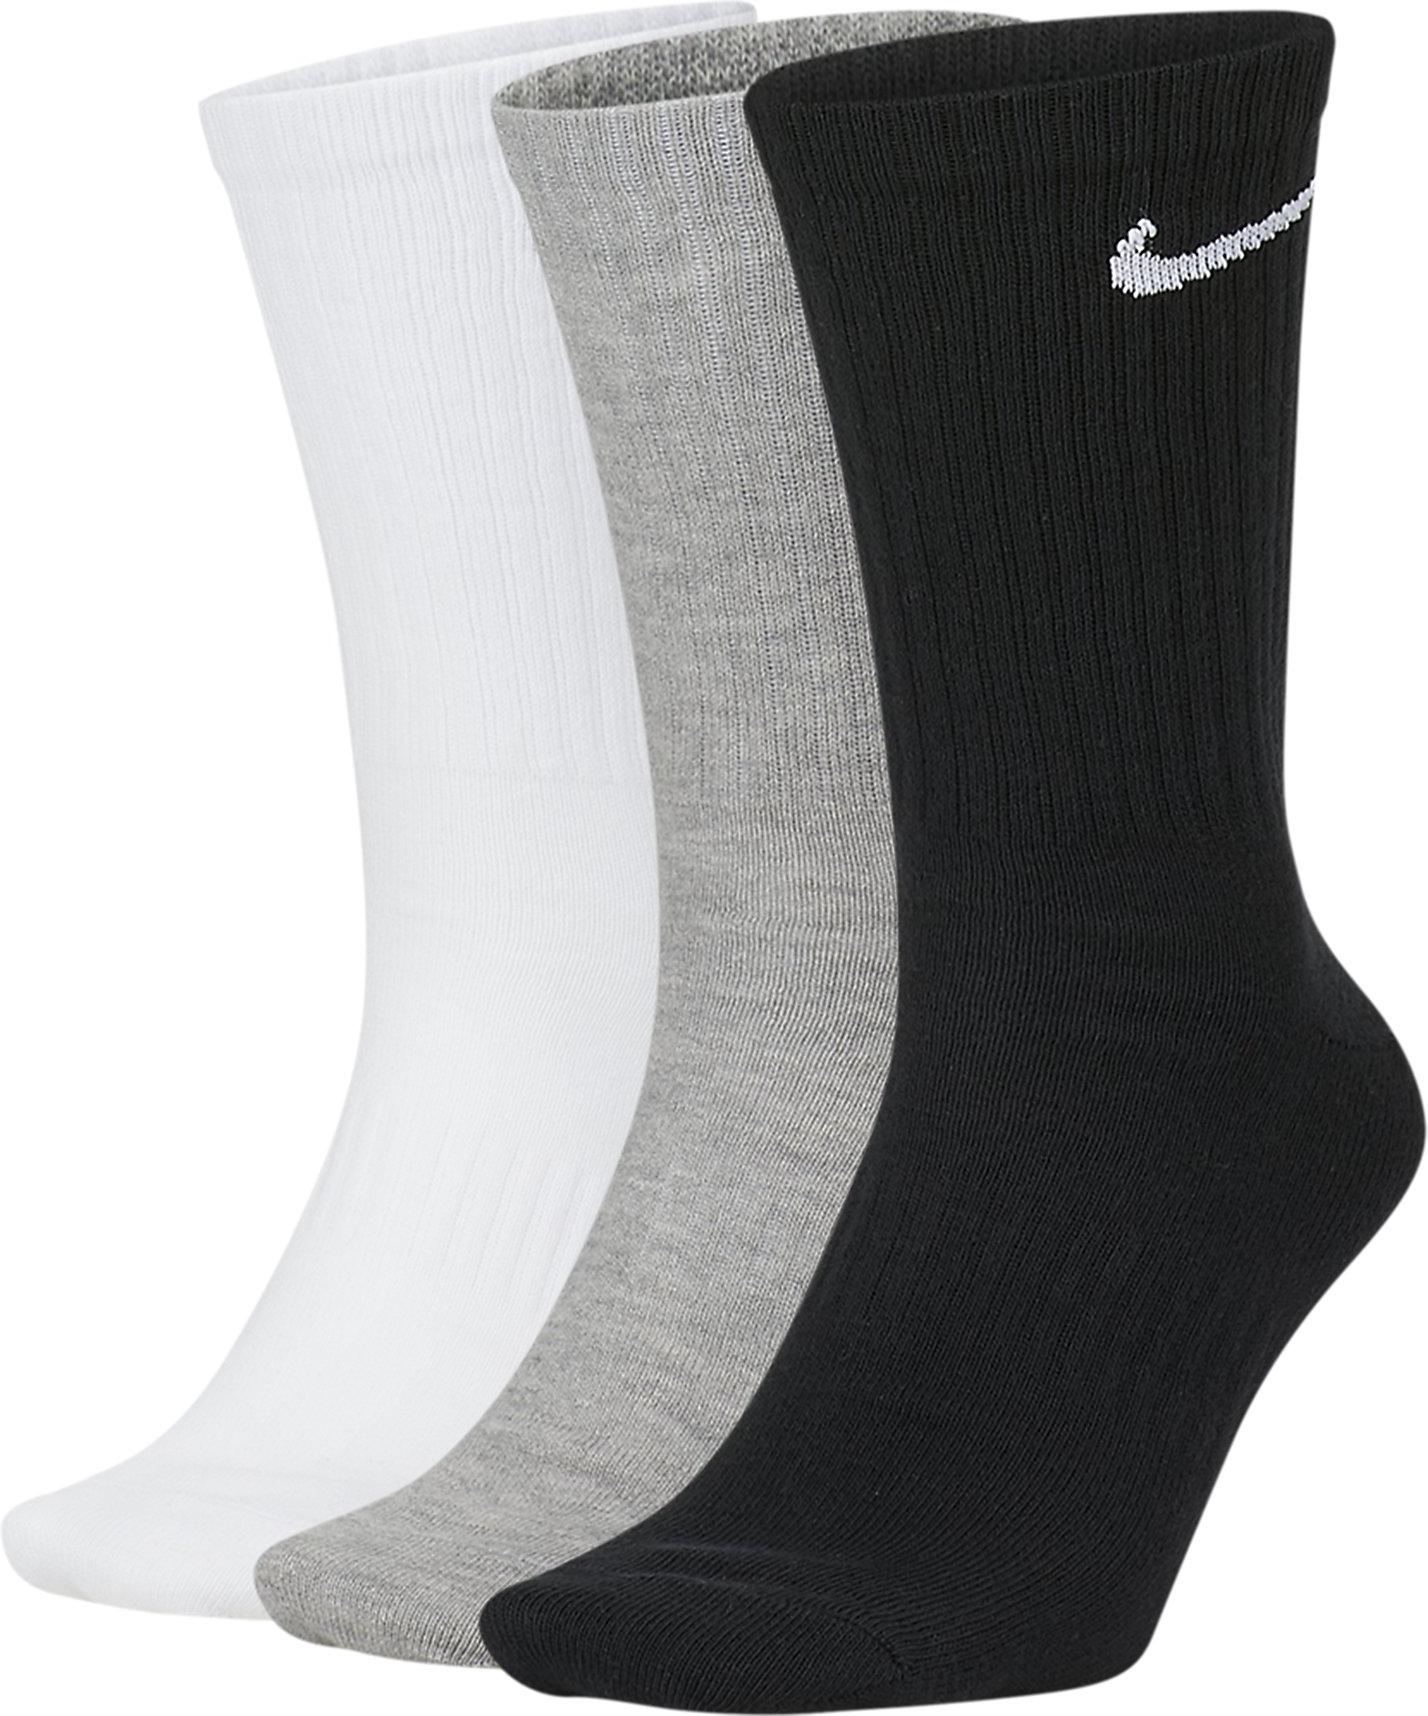 Čarape Nike Everyday 3 pack